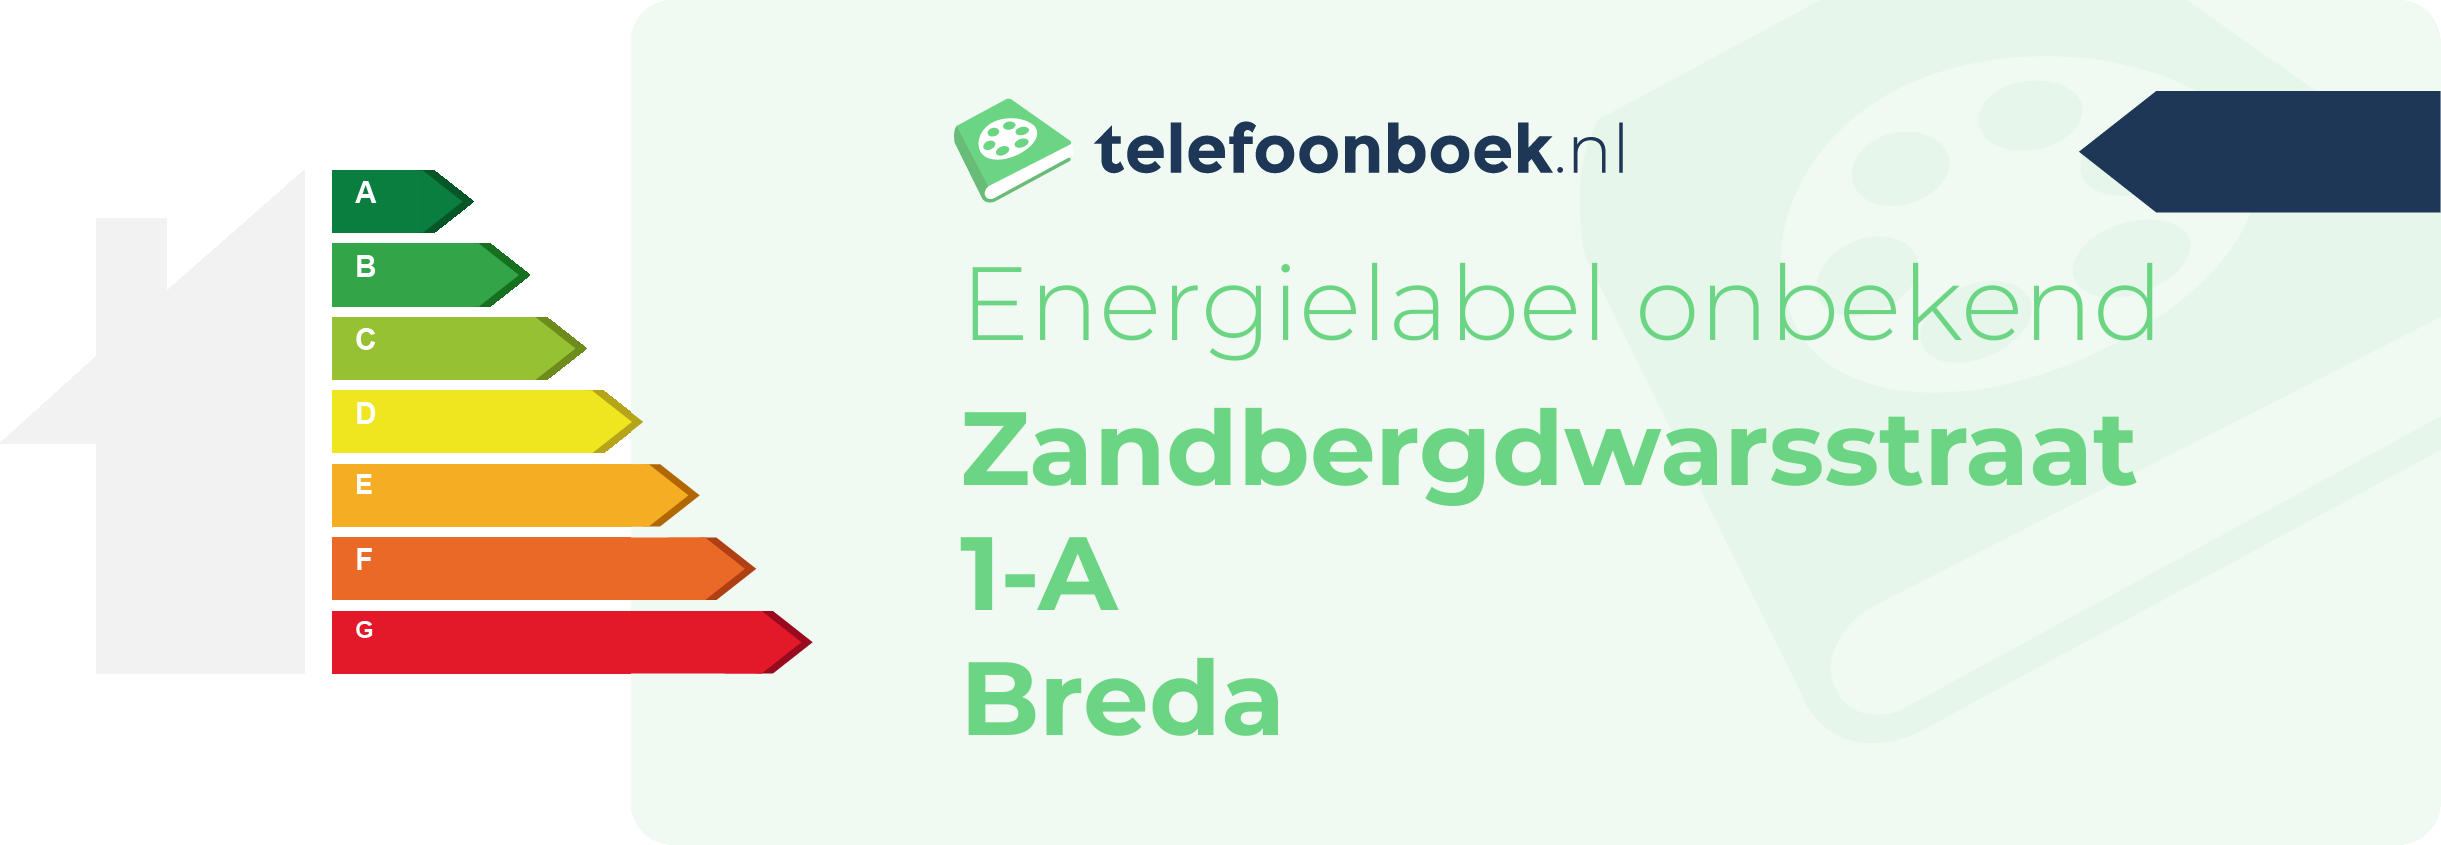 Energielabel Zandbergdwarsstraat 1-A Breda